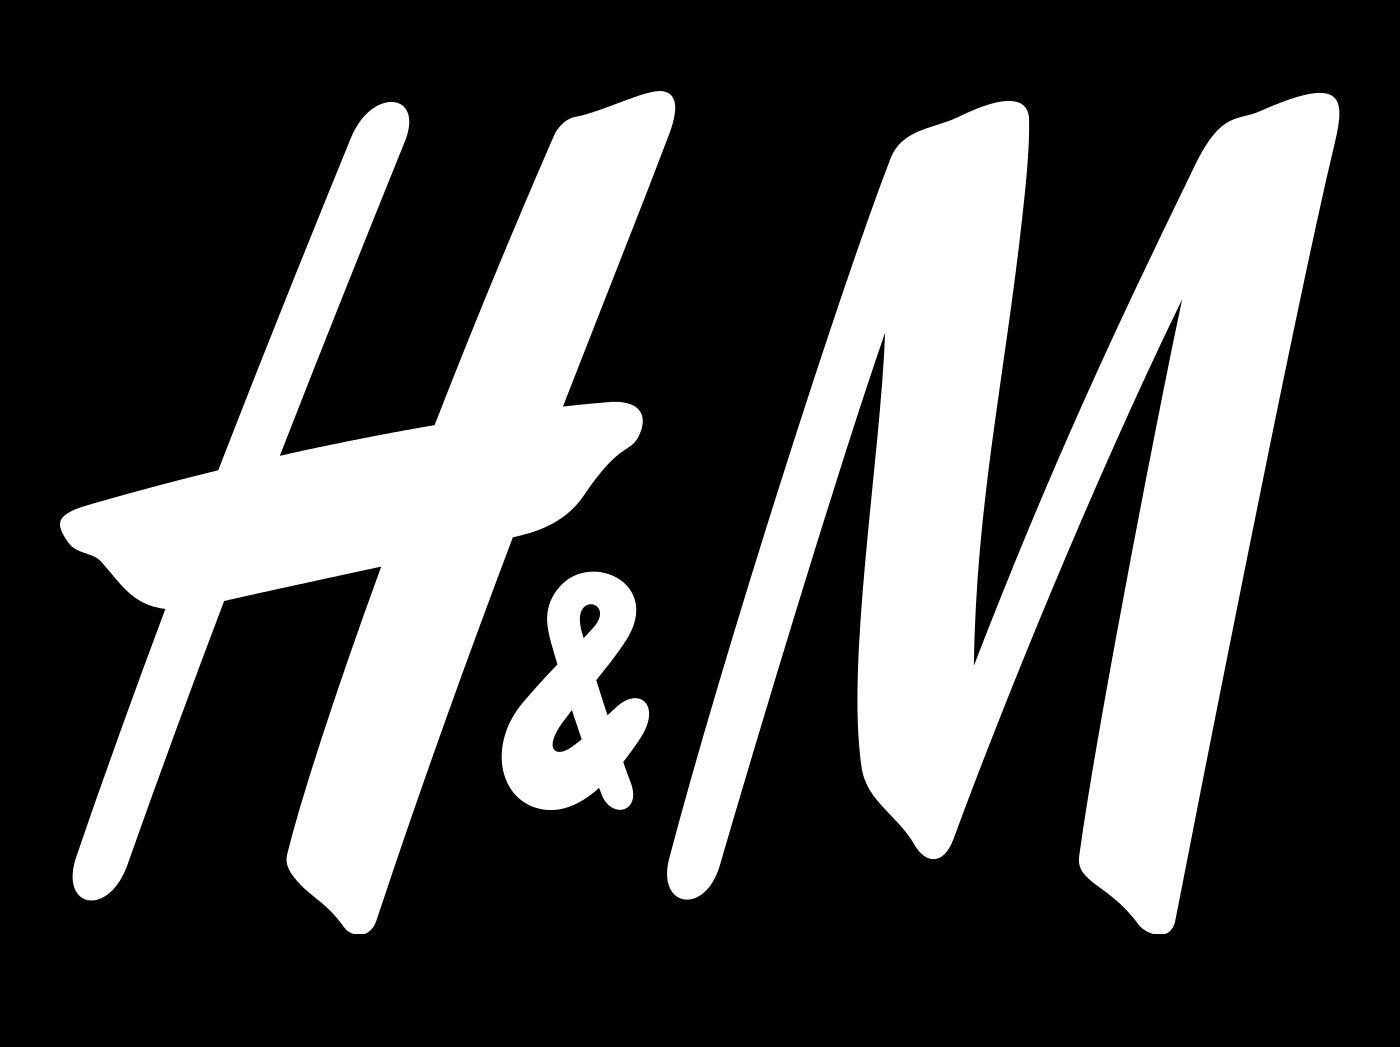 HM Logo - H&M Logo, H&M Symbol Meaning, History and Evolution